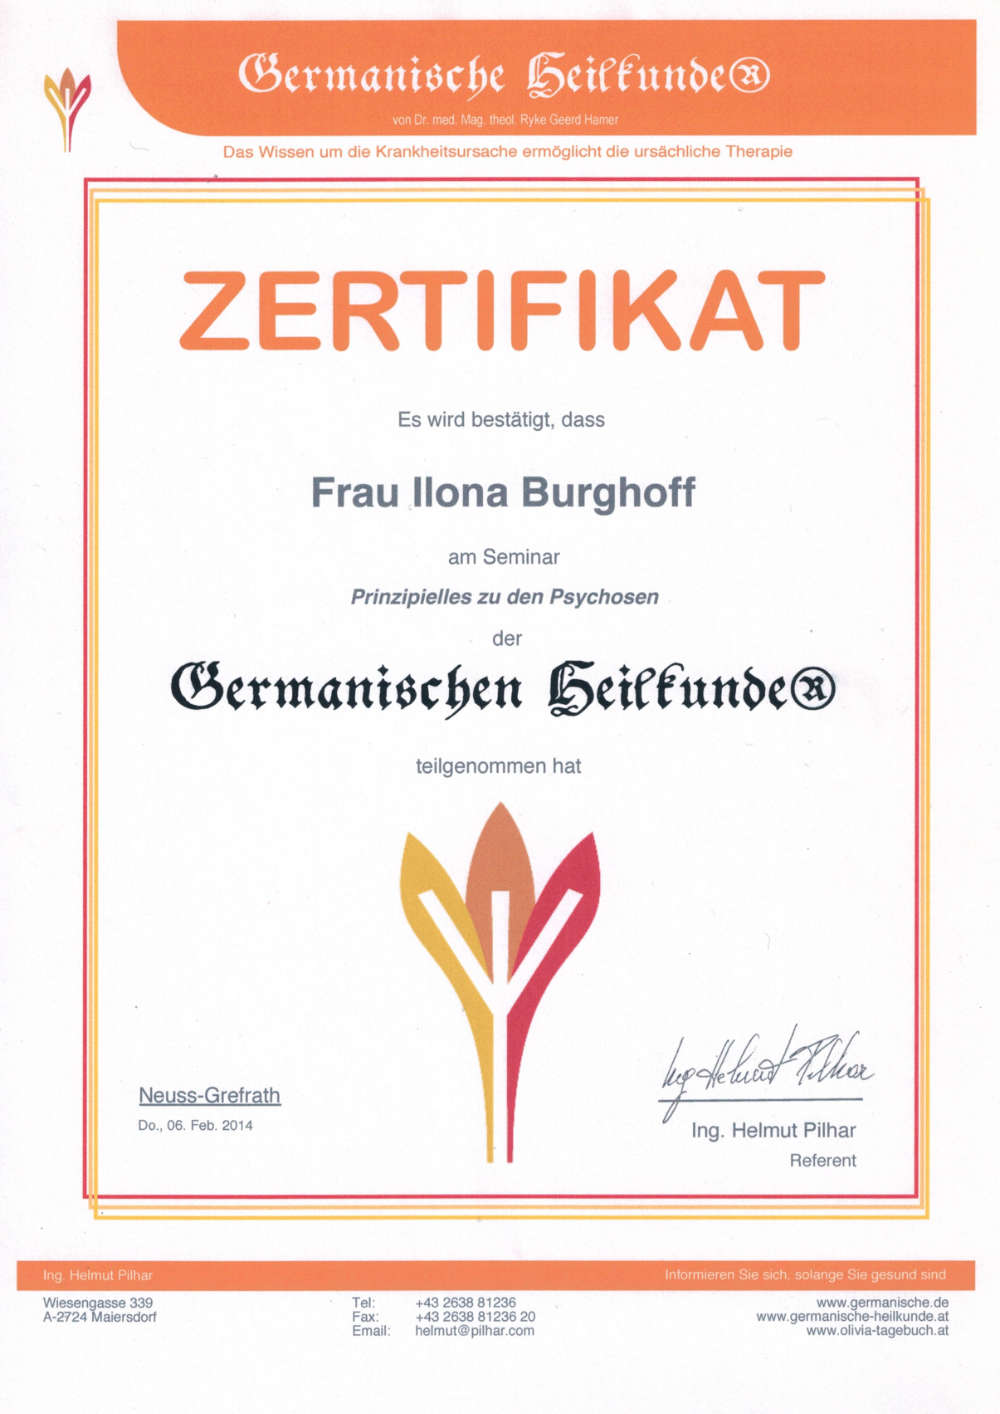 zertifikat germanische heilkunde